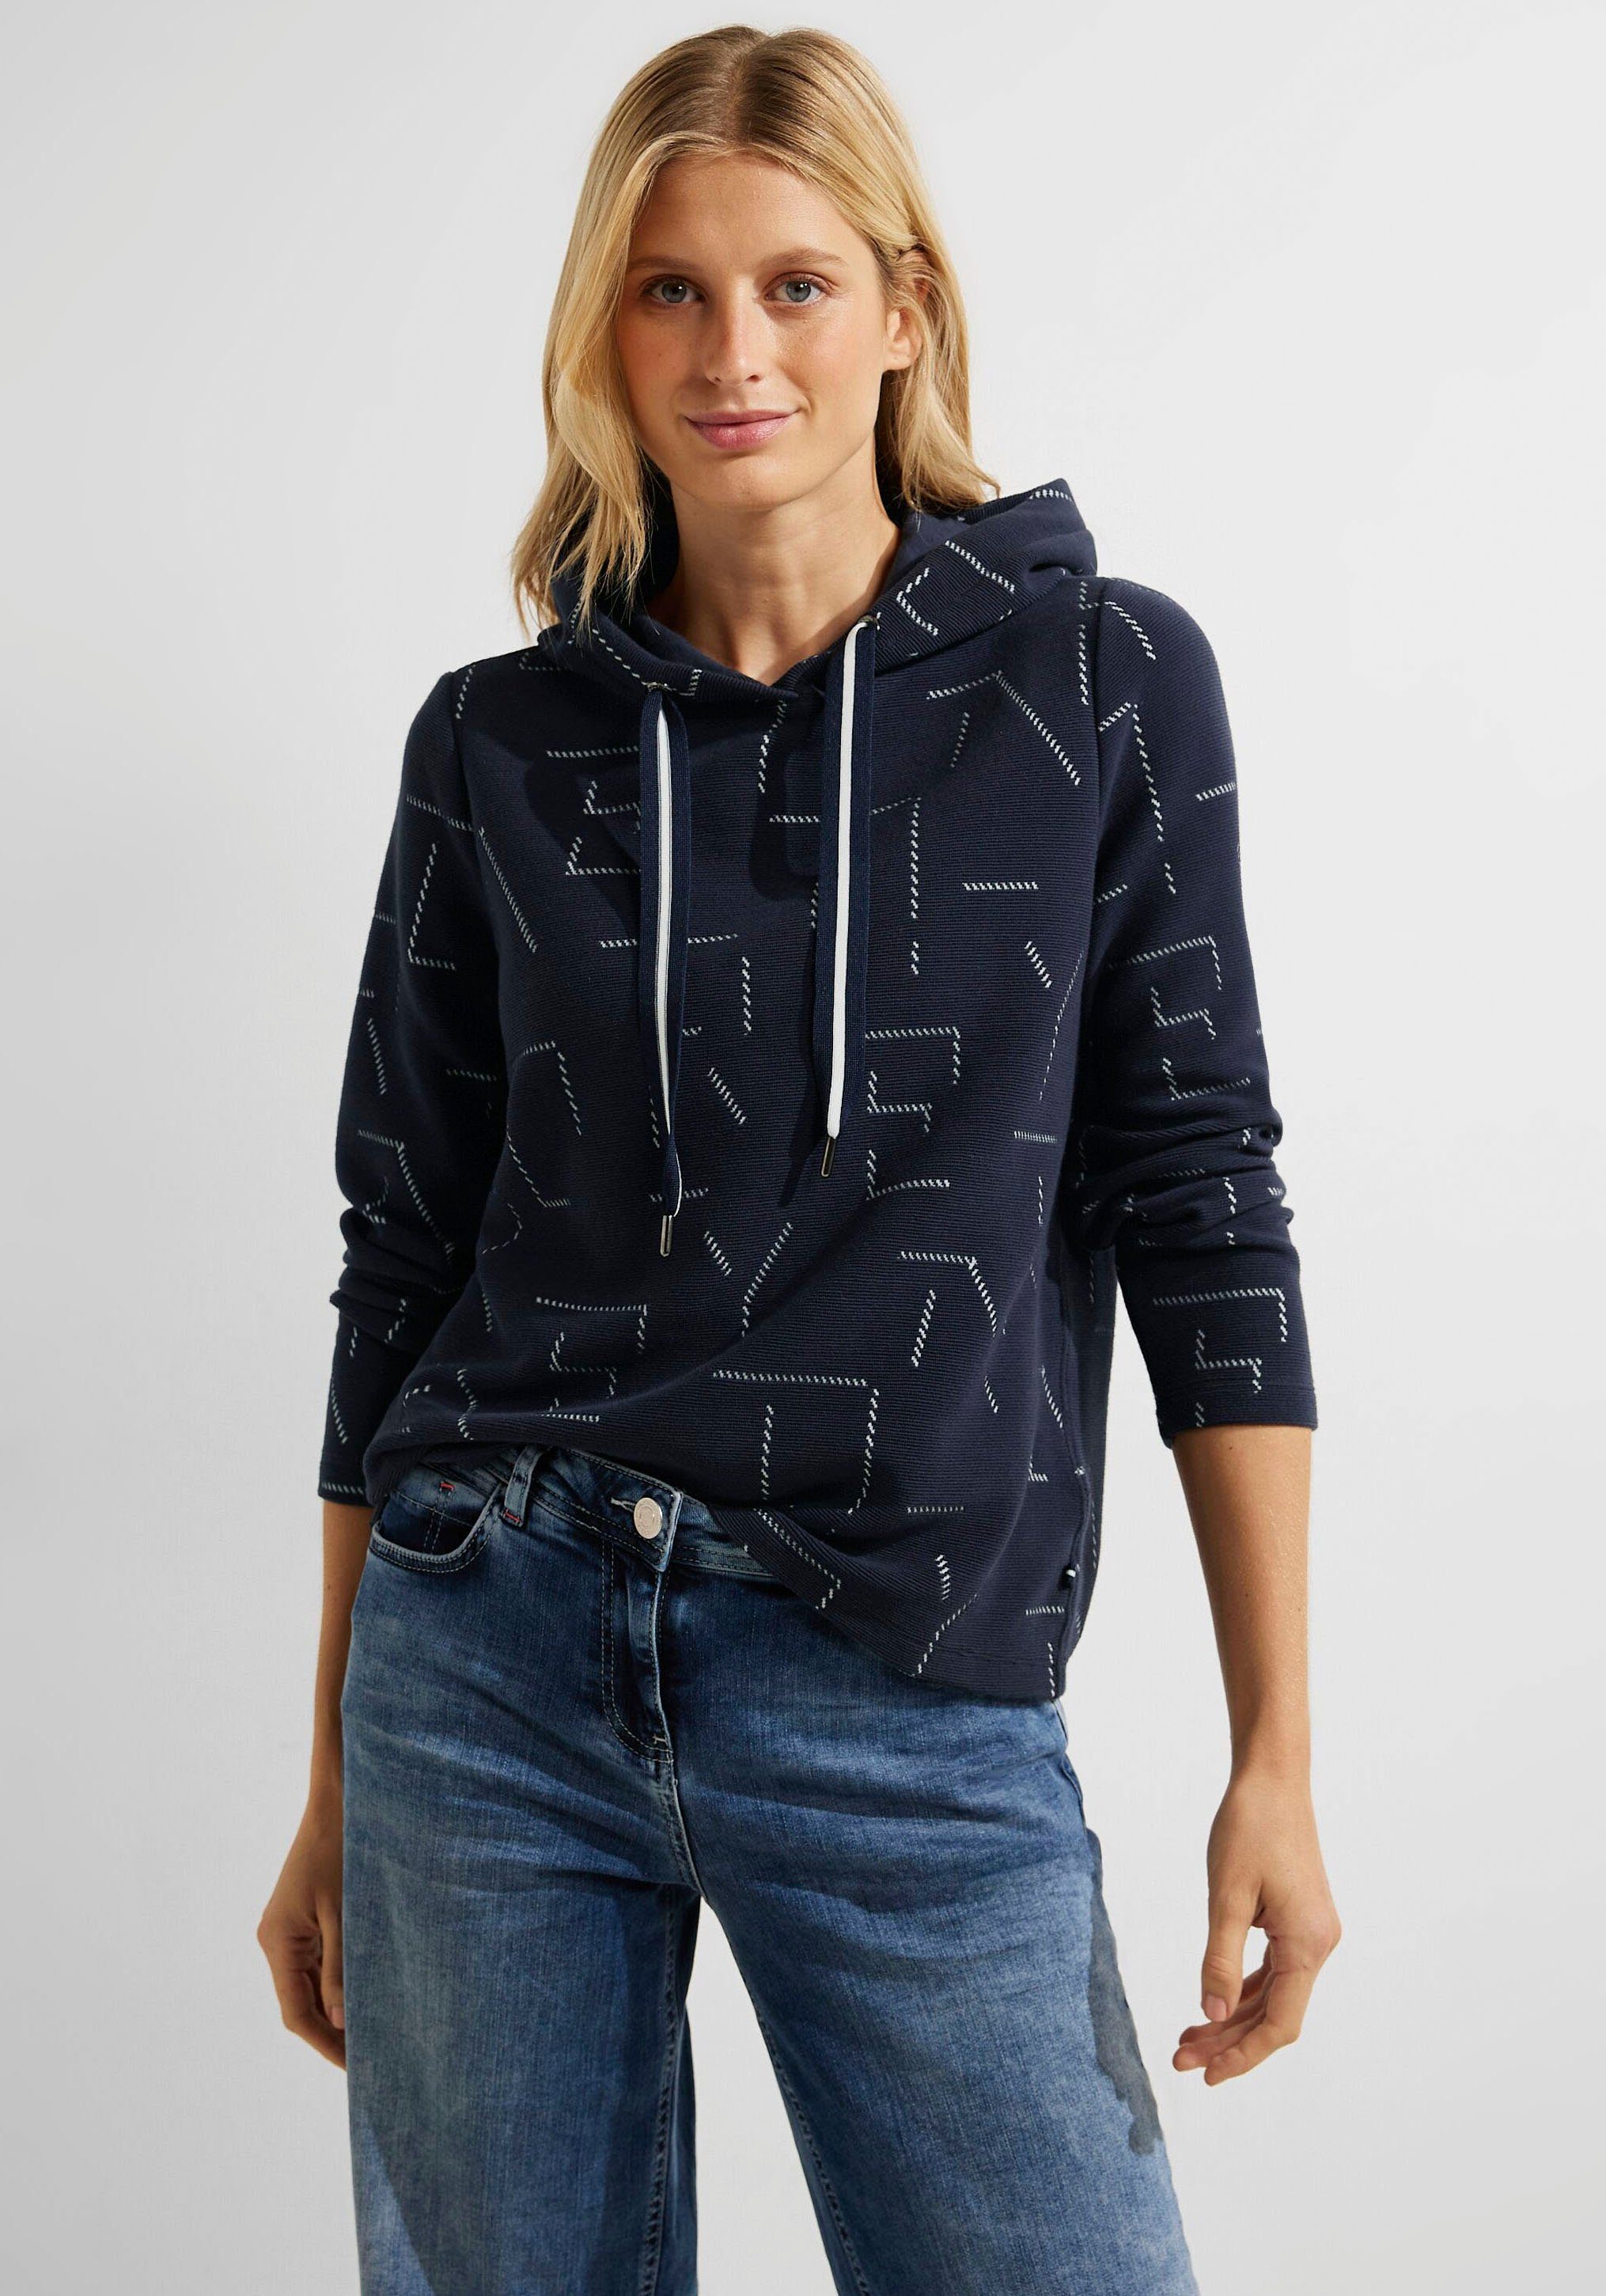 Sweatshirt mit night Cecil blue sky Jacquard-Muster einzigartigem